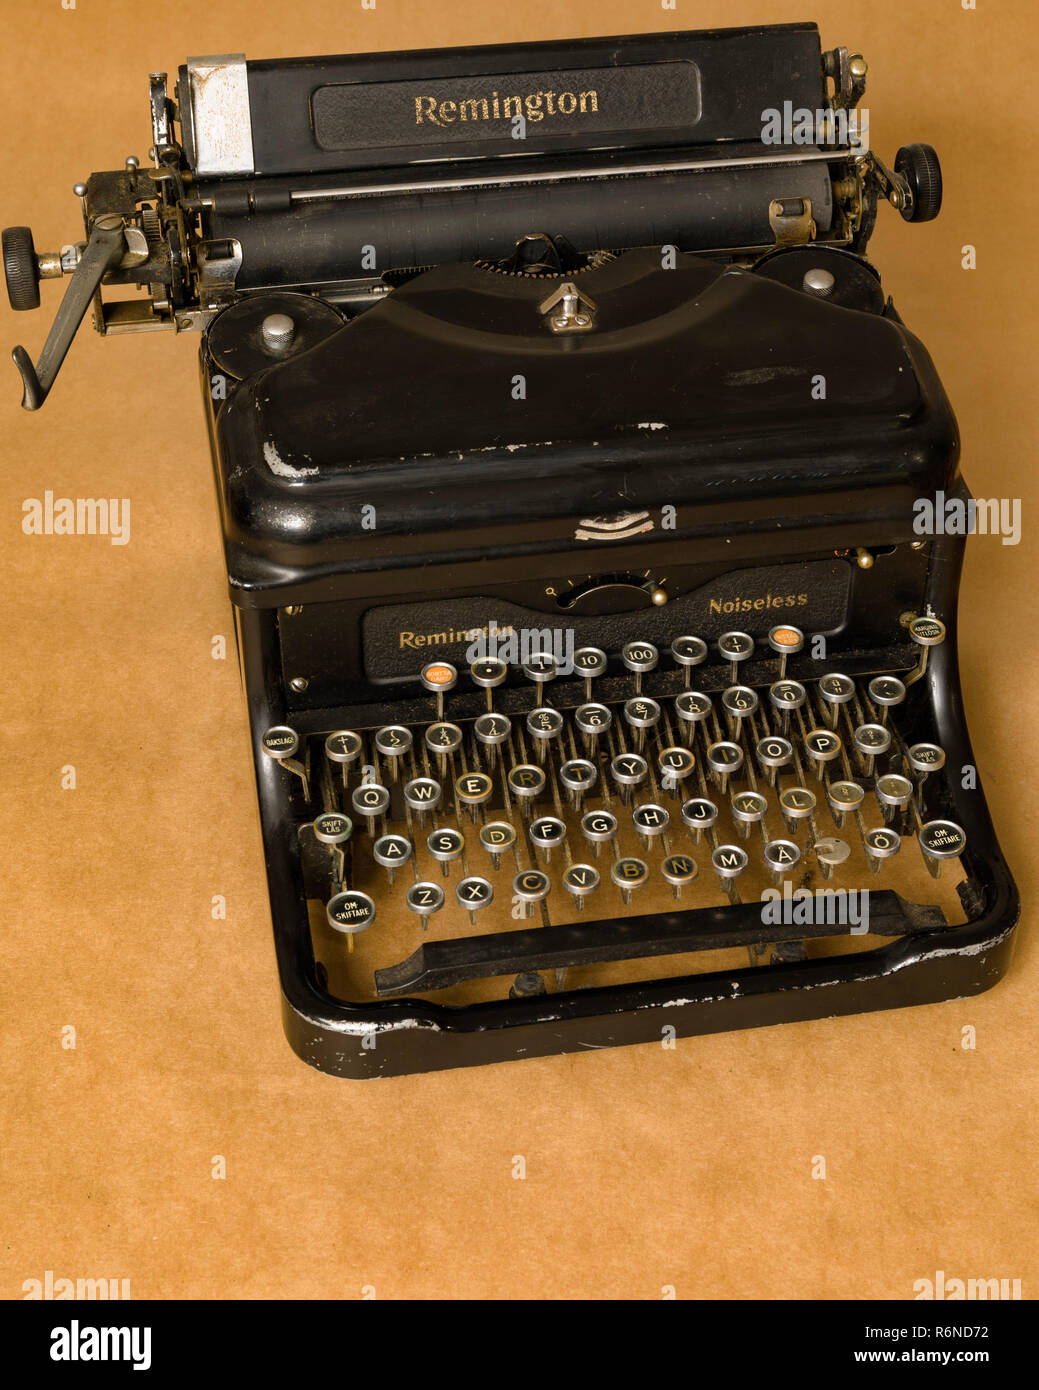 FLODA, SWEDEN - NOVEMBER 22 2018: Vintage Remington noiseless typewriter on neutral background Stock Photo